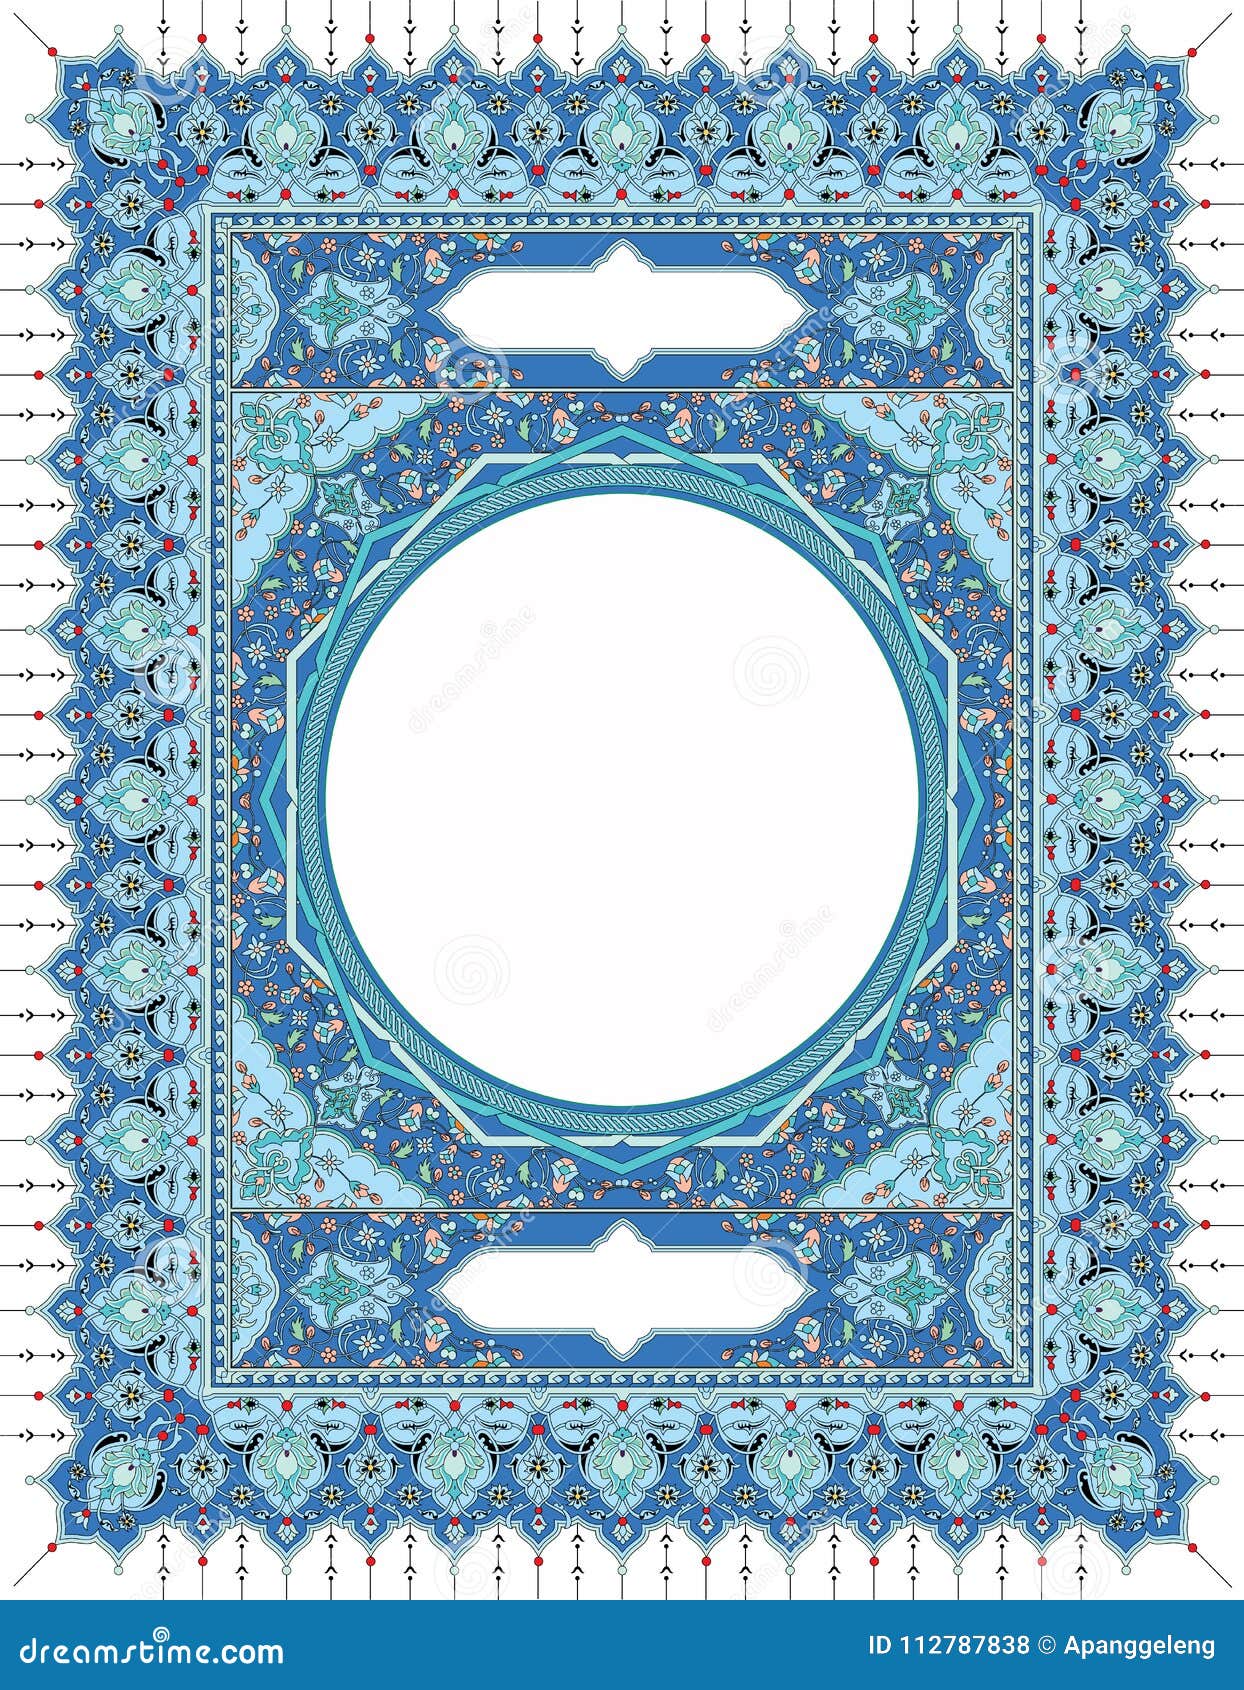 inside prayer book cover in floral islamic art